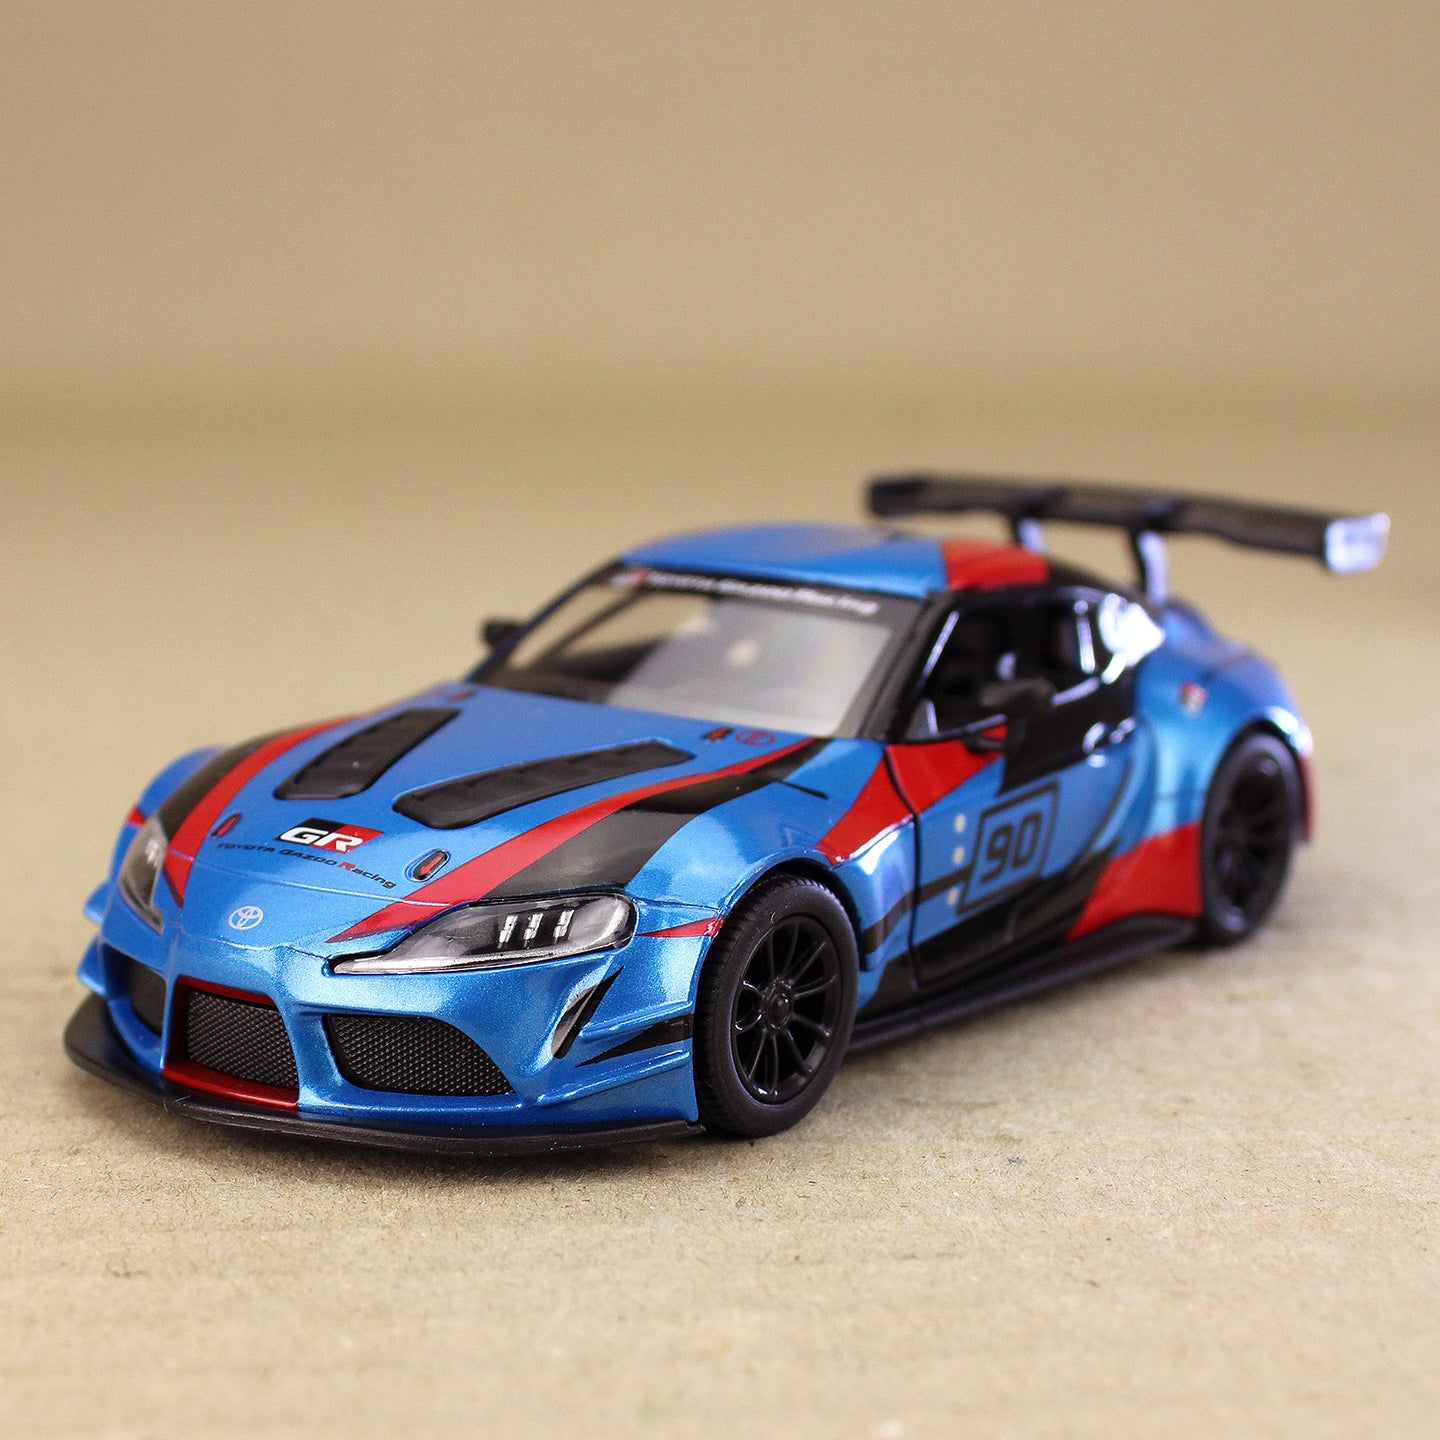 2020 Toyota Supra GR Racing Concept Car - Blue